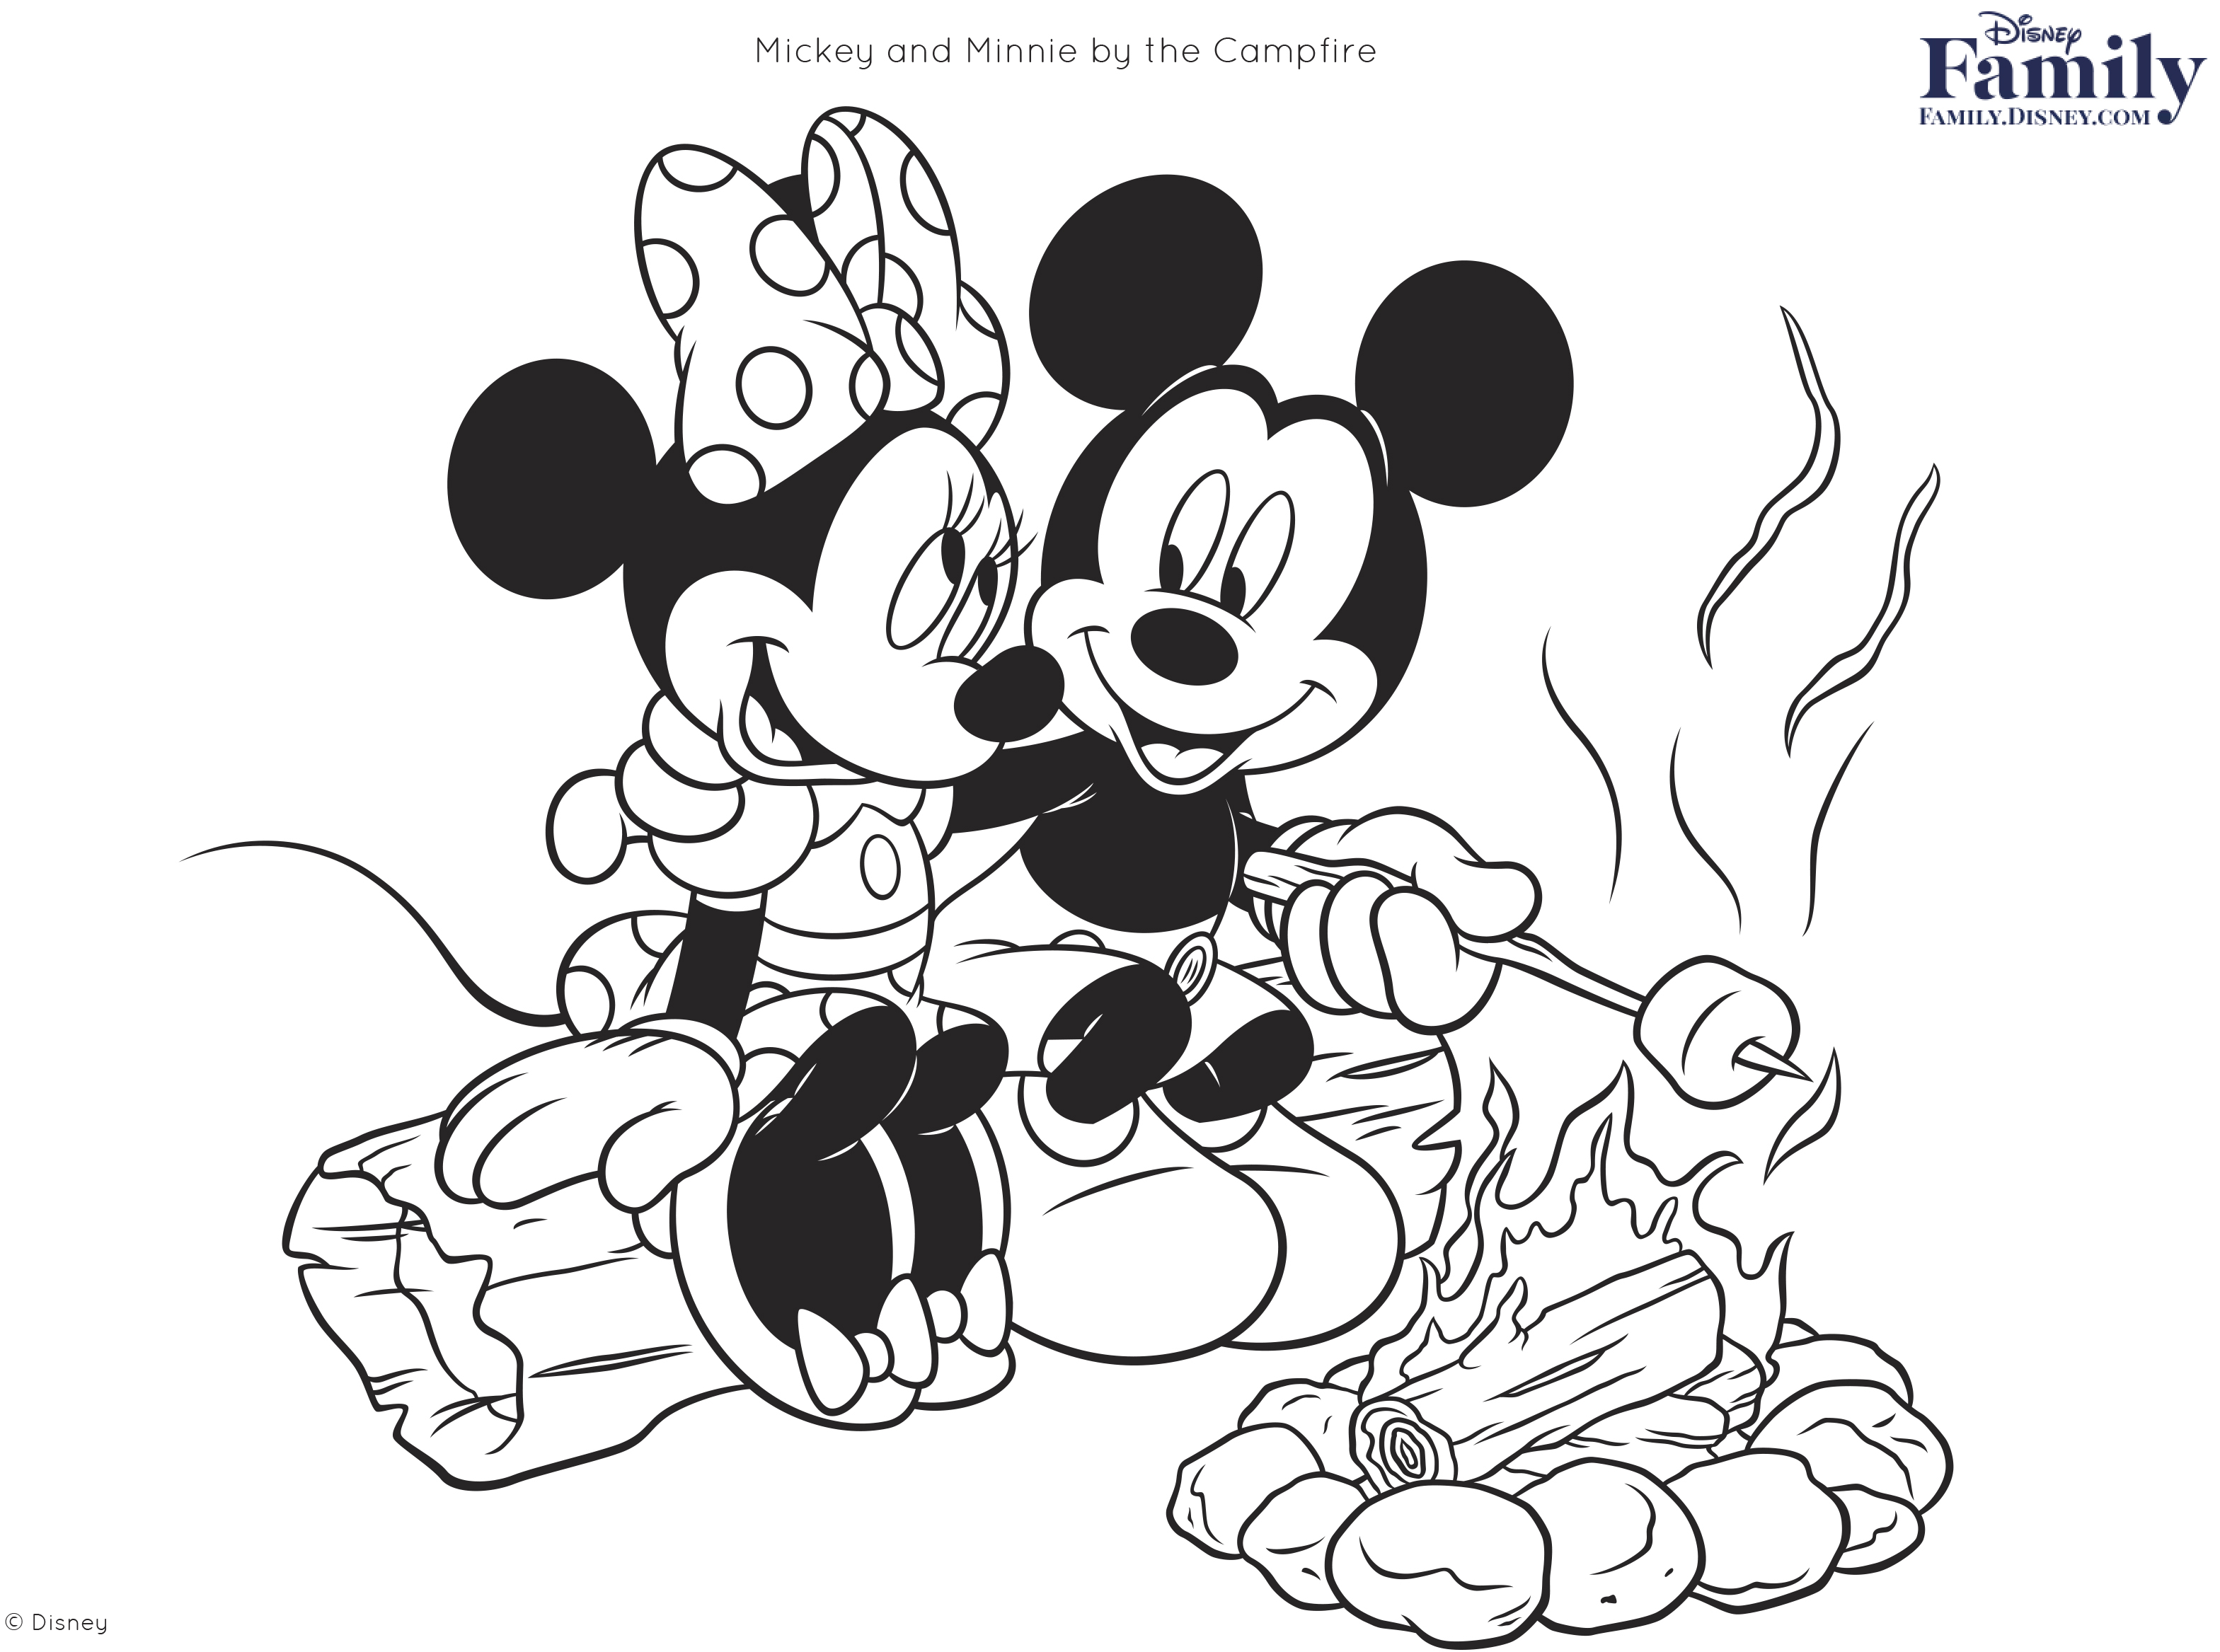 Disney.com Coloring Pages Disney Coloring Pages Disney Family